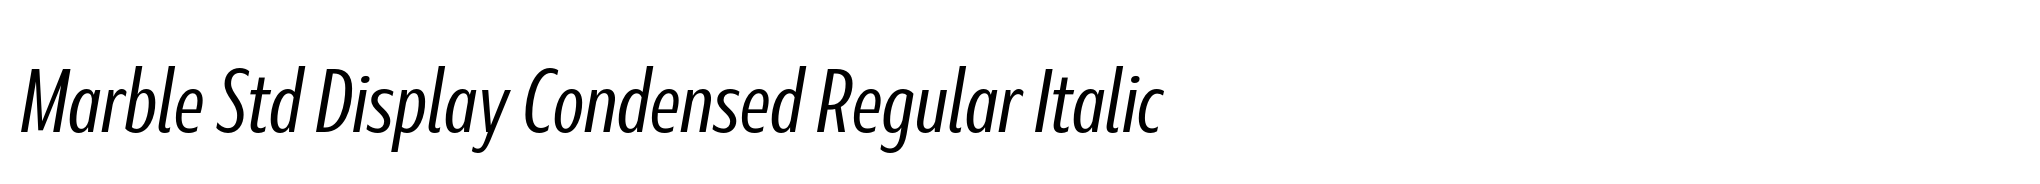 Marble Std Display Condensed Regular Italic image